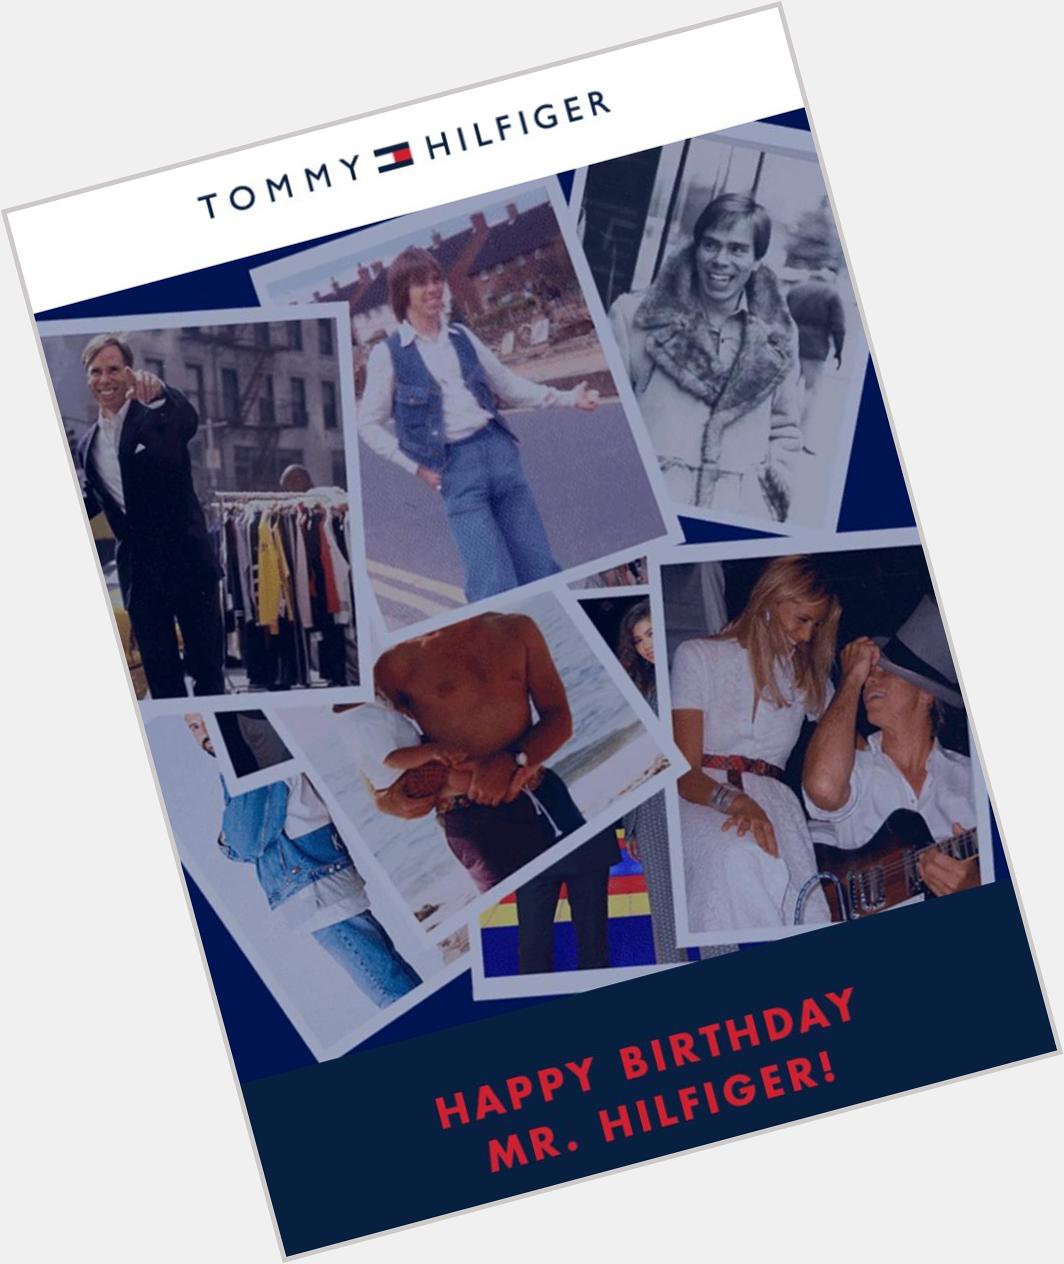 Post Happy 70th Birthday to Tommy Hilfiger  